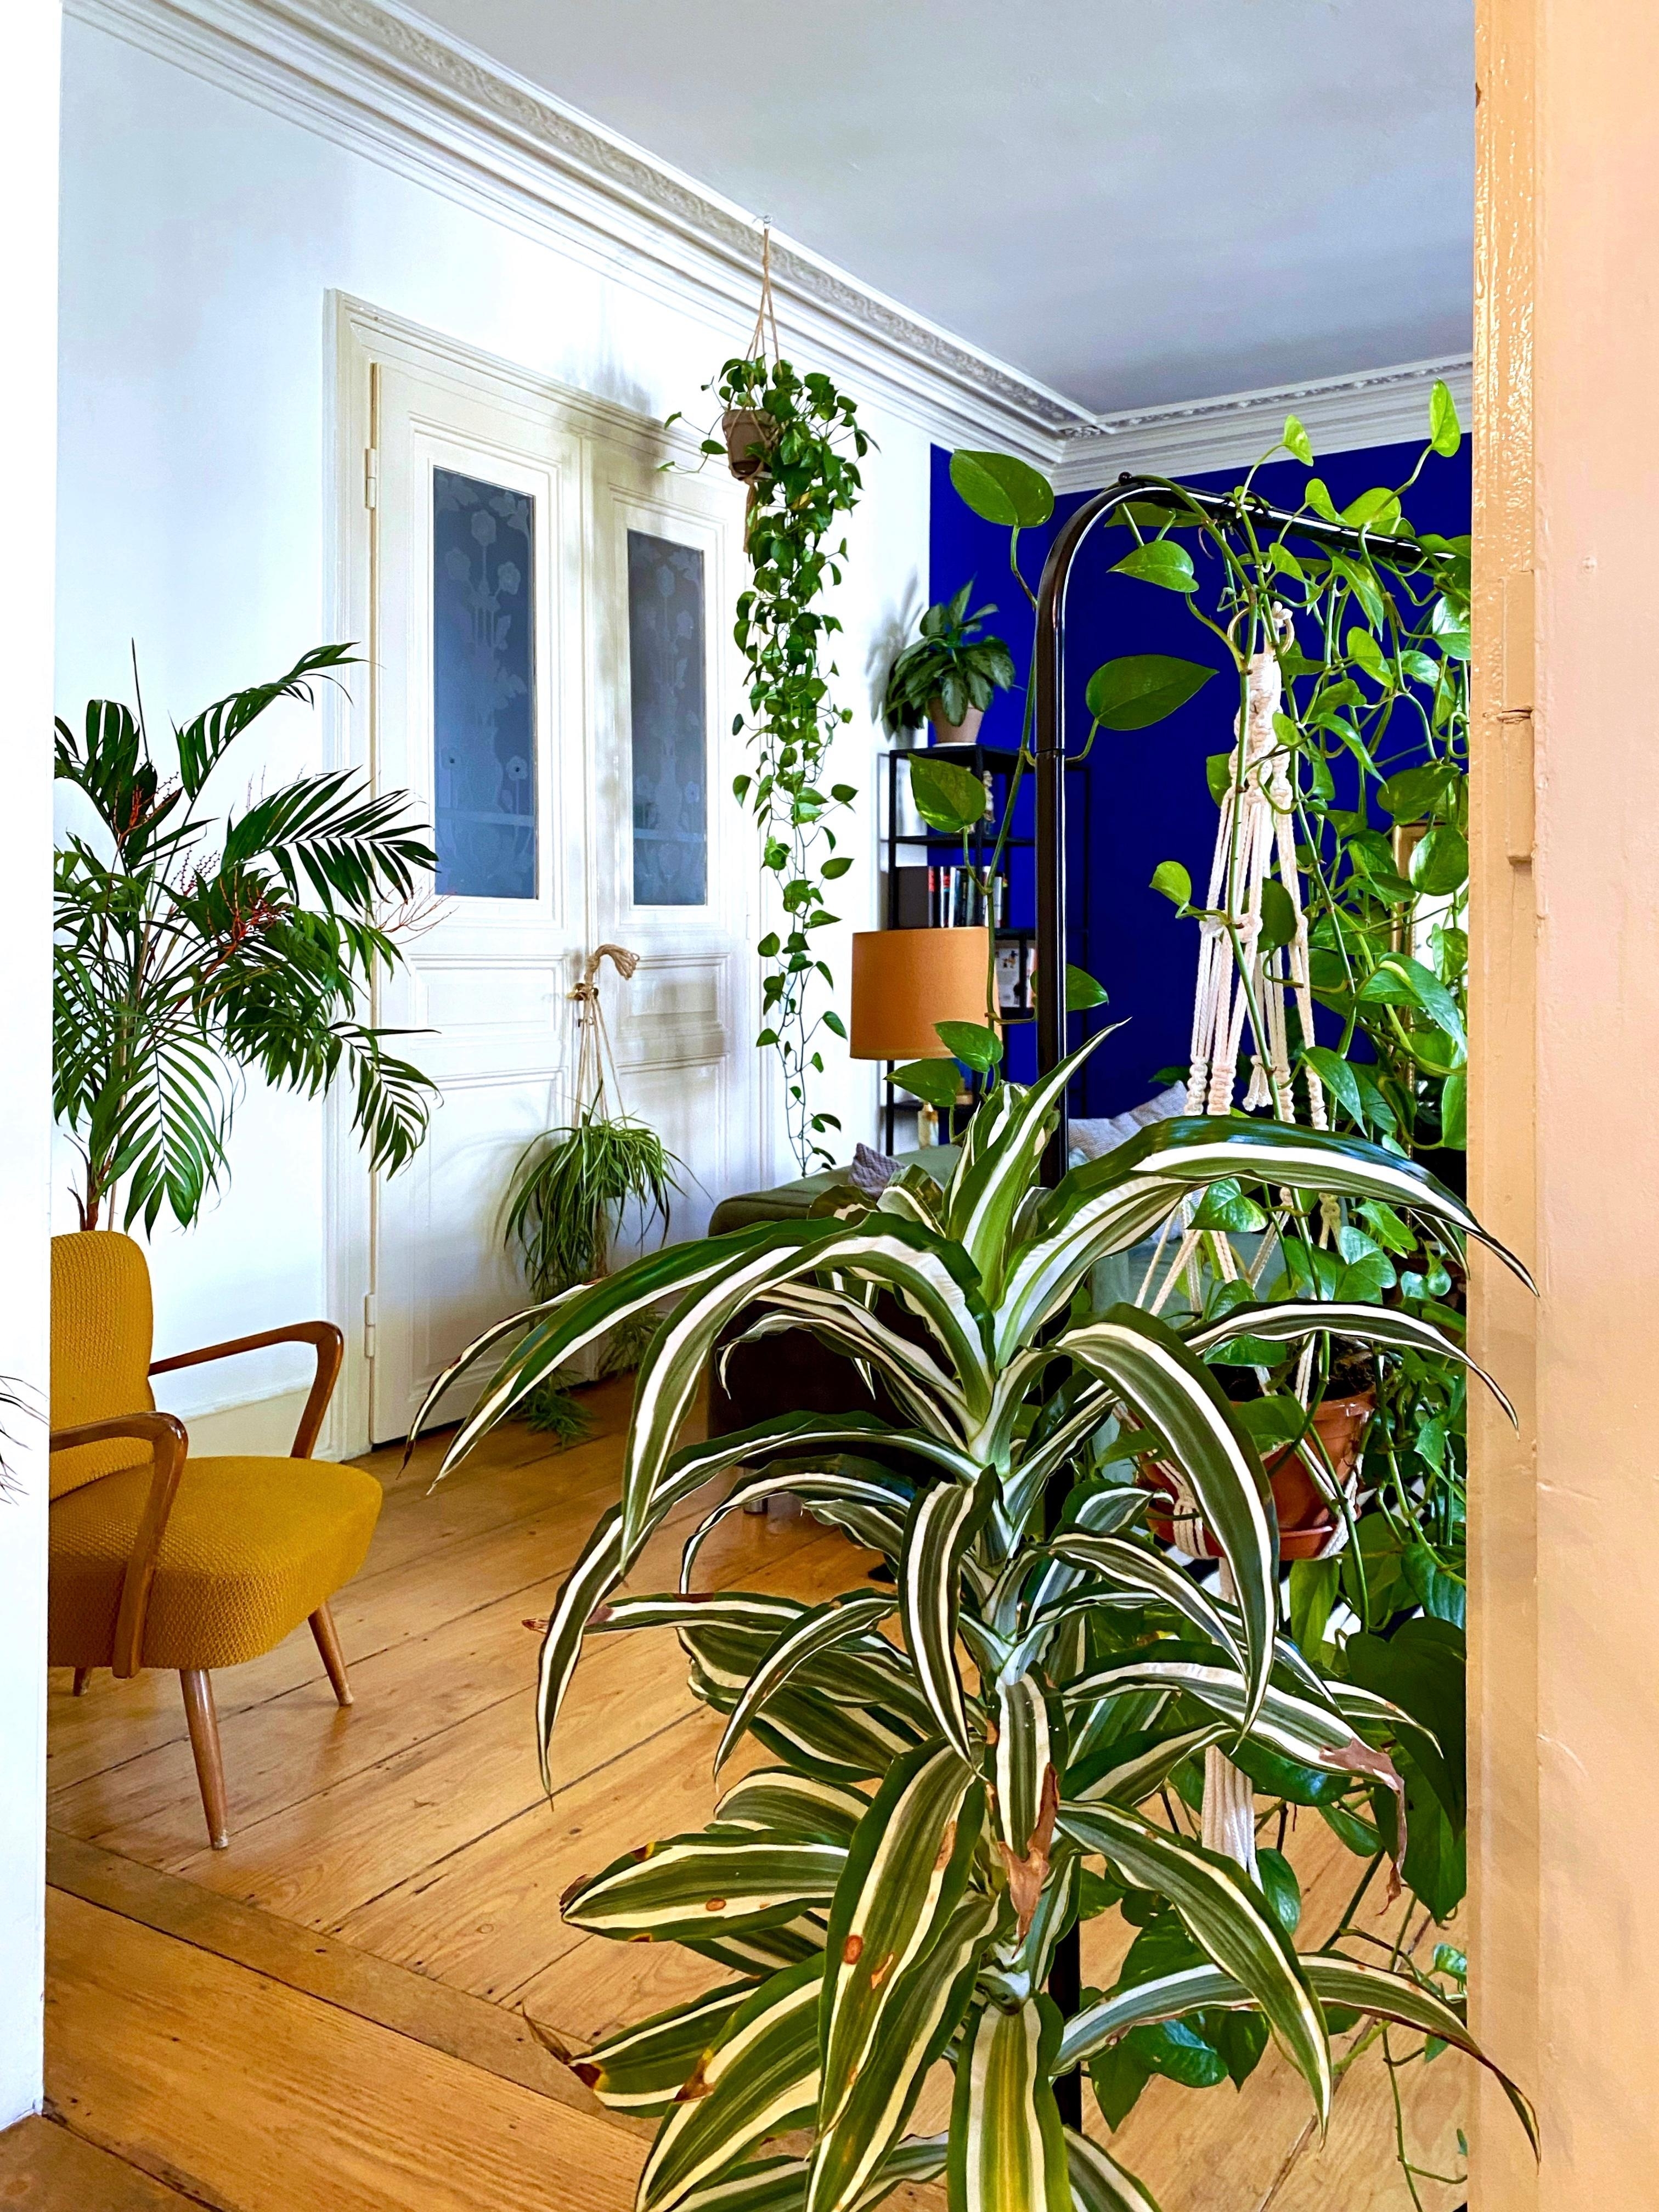 #urbanjungle #plants #wohnzimmer #livingroom